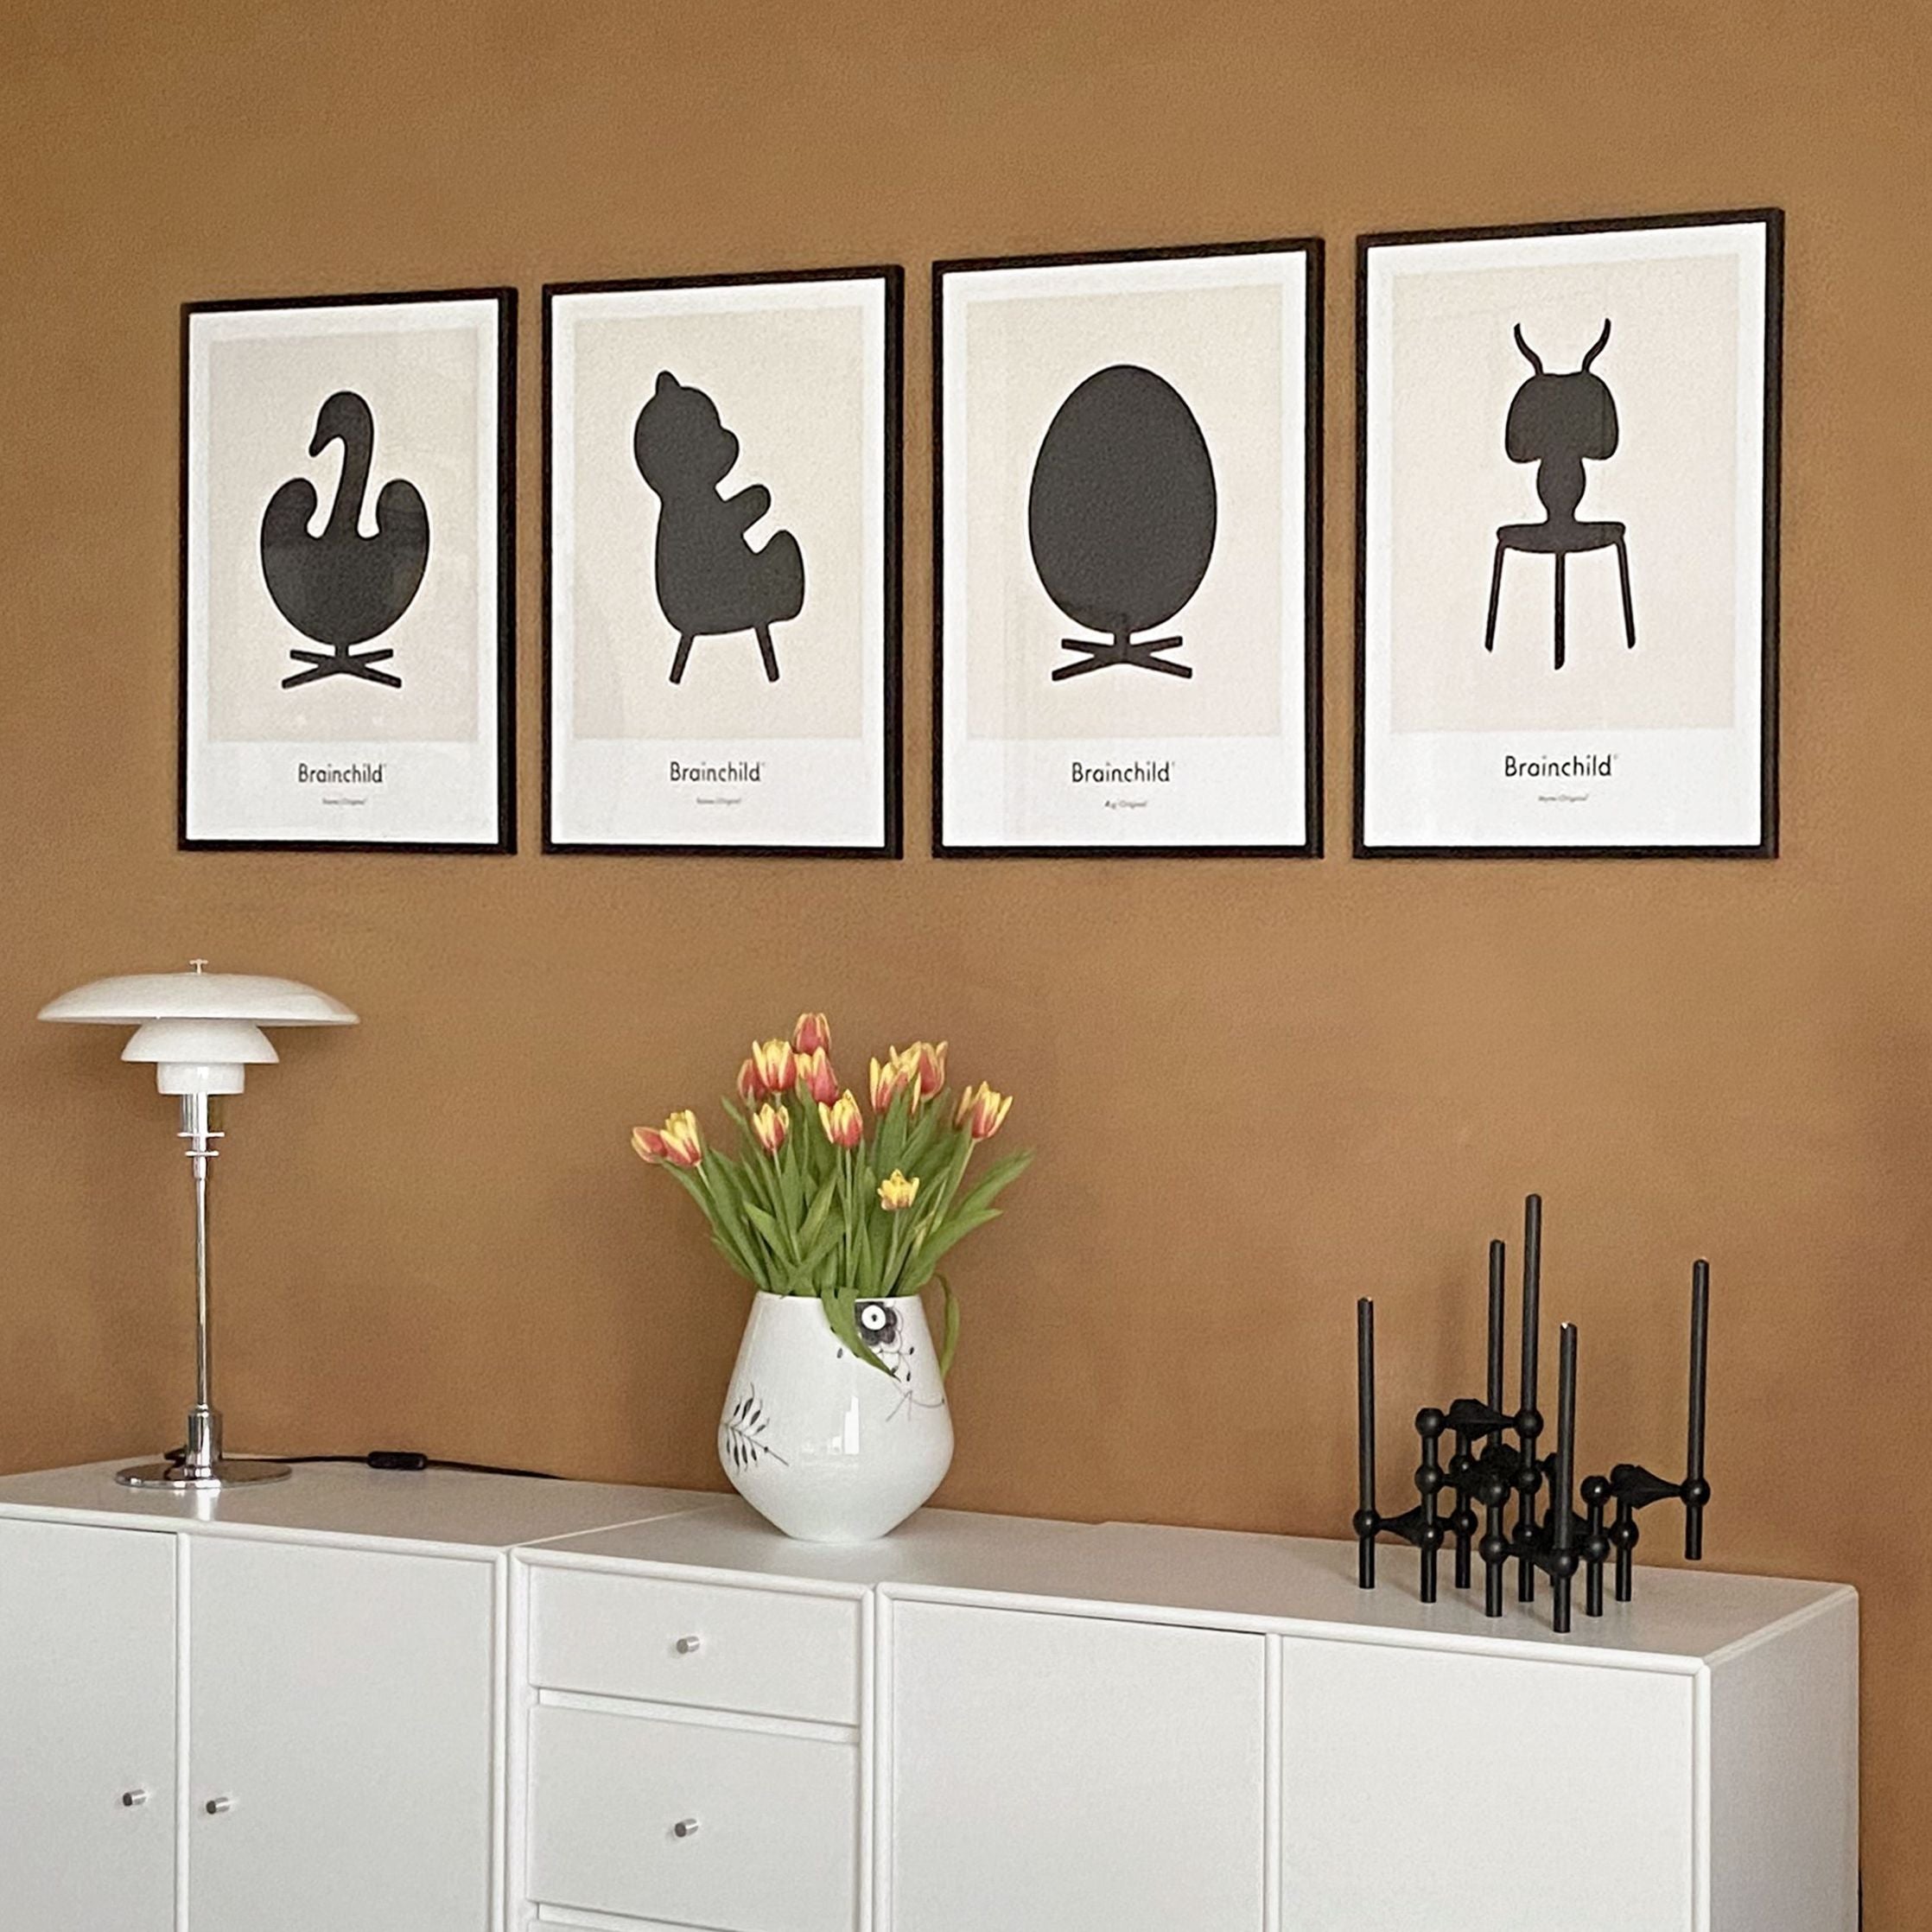 Brainchild Teddybär Design Icon Poster, Rahmen aus dunklem Holz 30x40 Cm, Grau